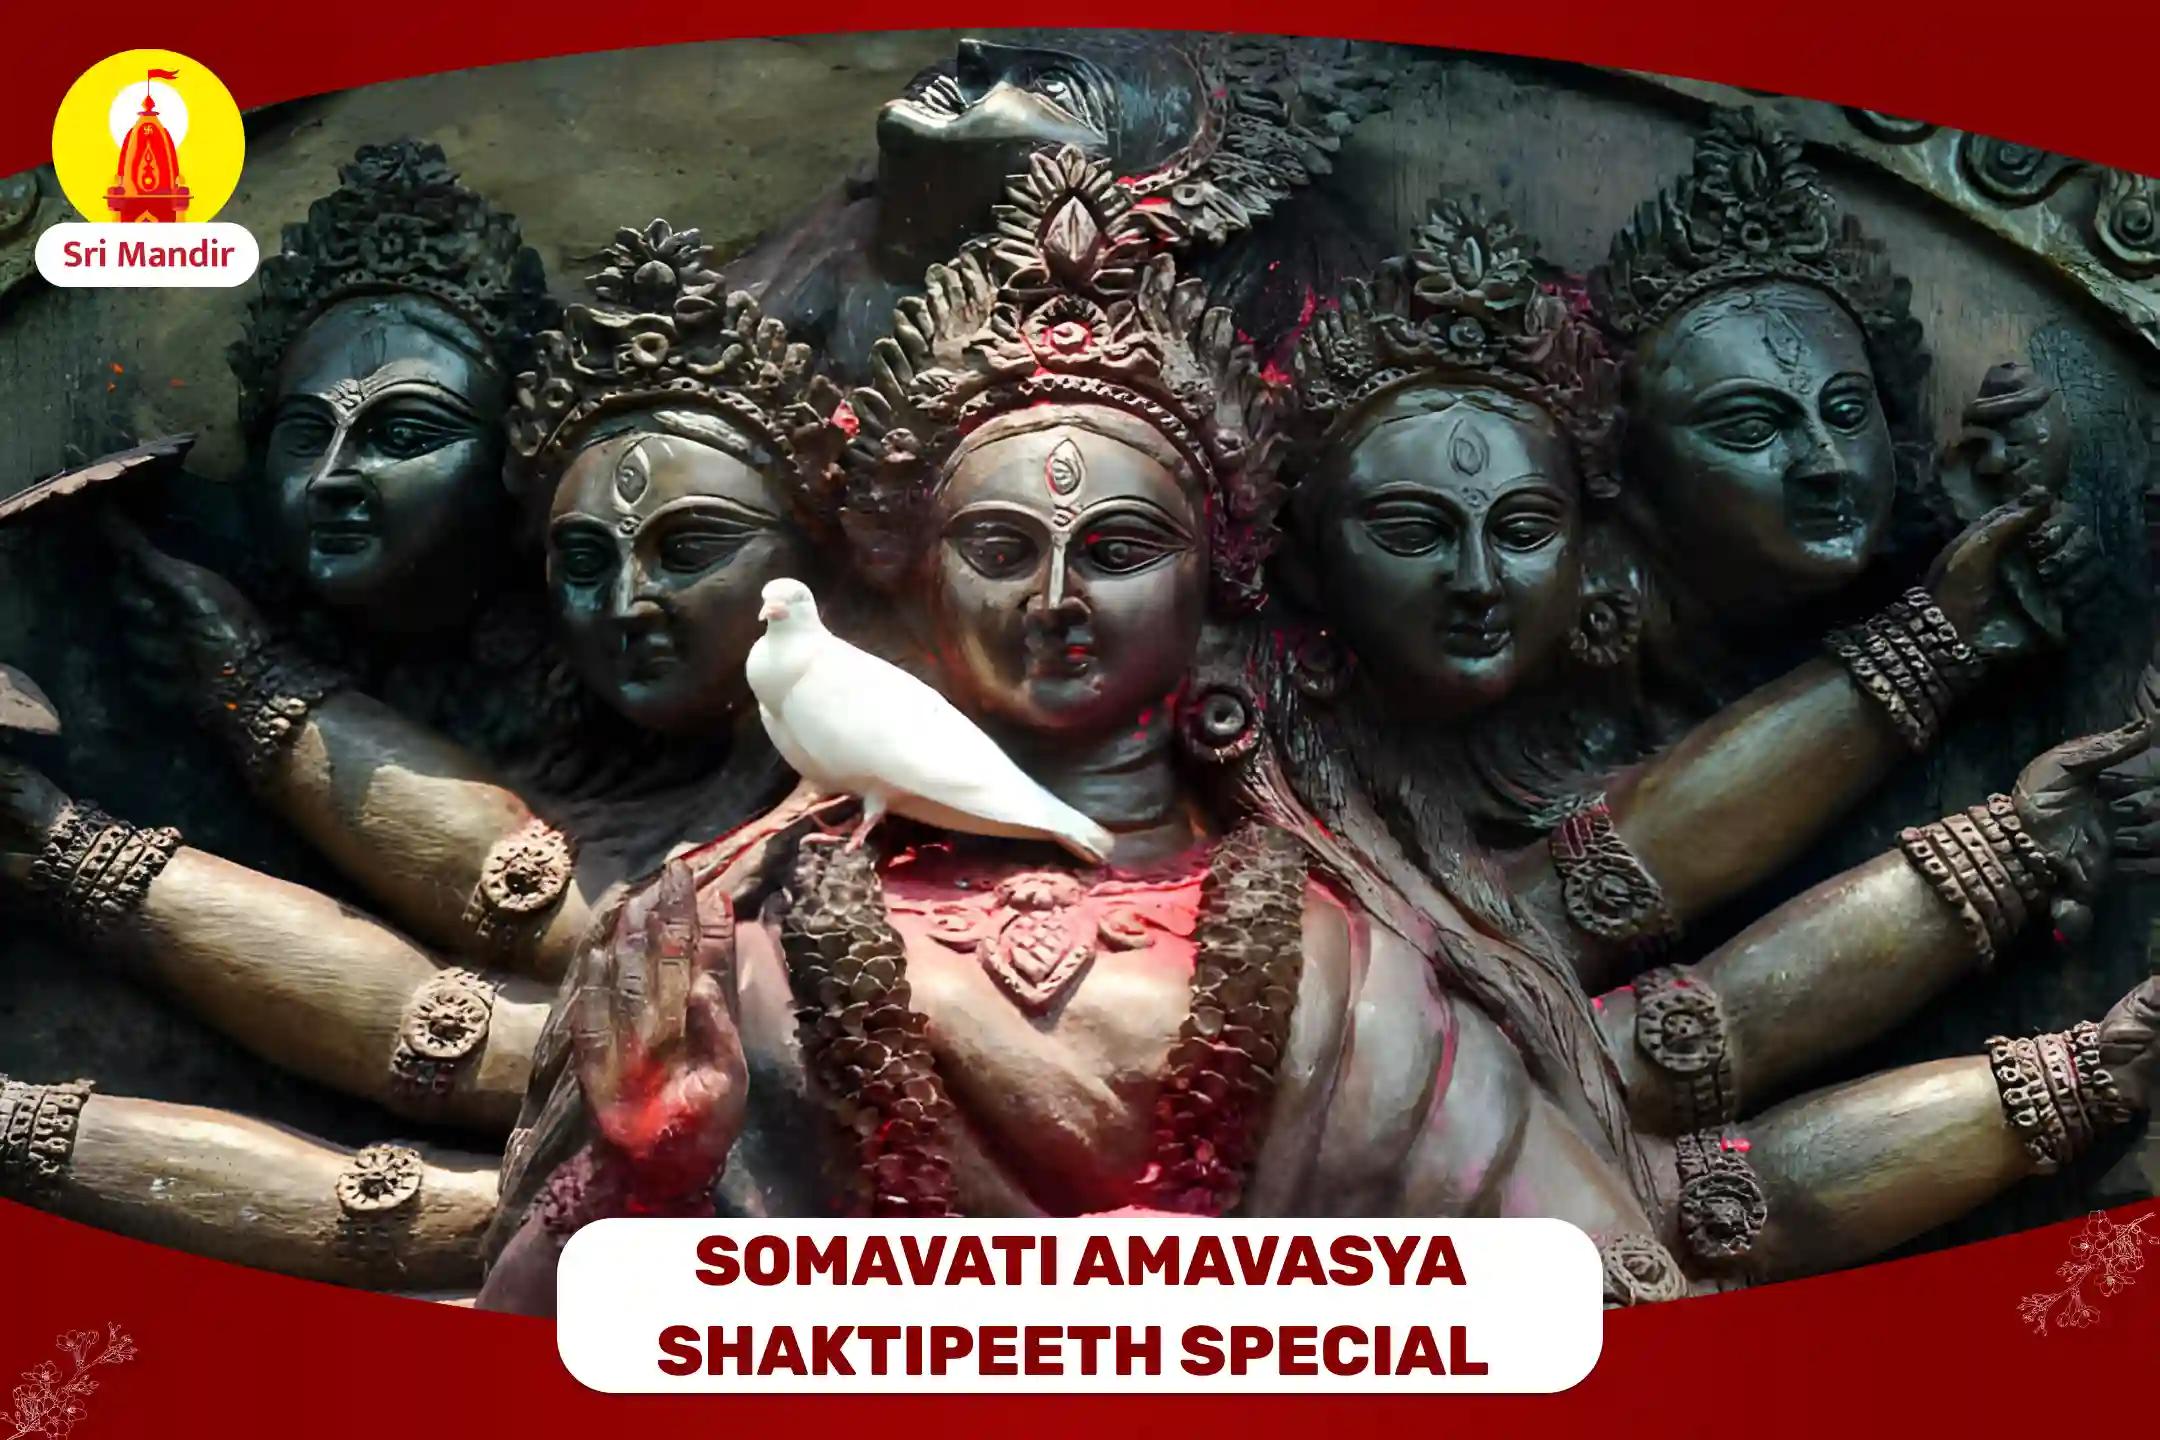 Somavati Amavasya Shaktipeeth Special Maa Kamakhya Tantrokta Maha Yagya To Achieve Bliss in Relationship and Resolve Conflicts